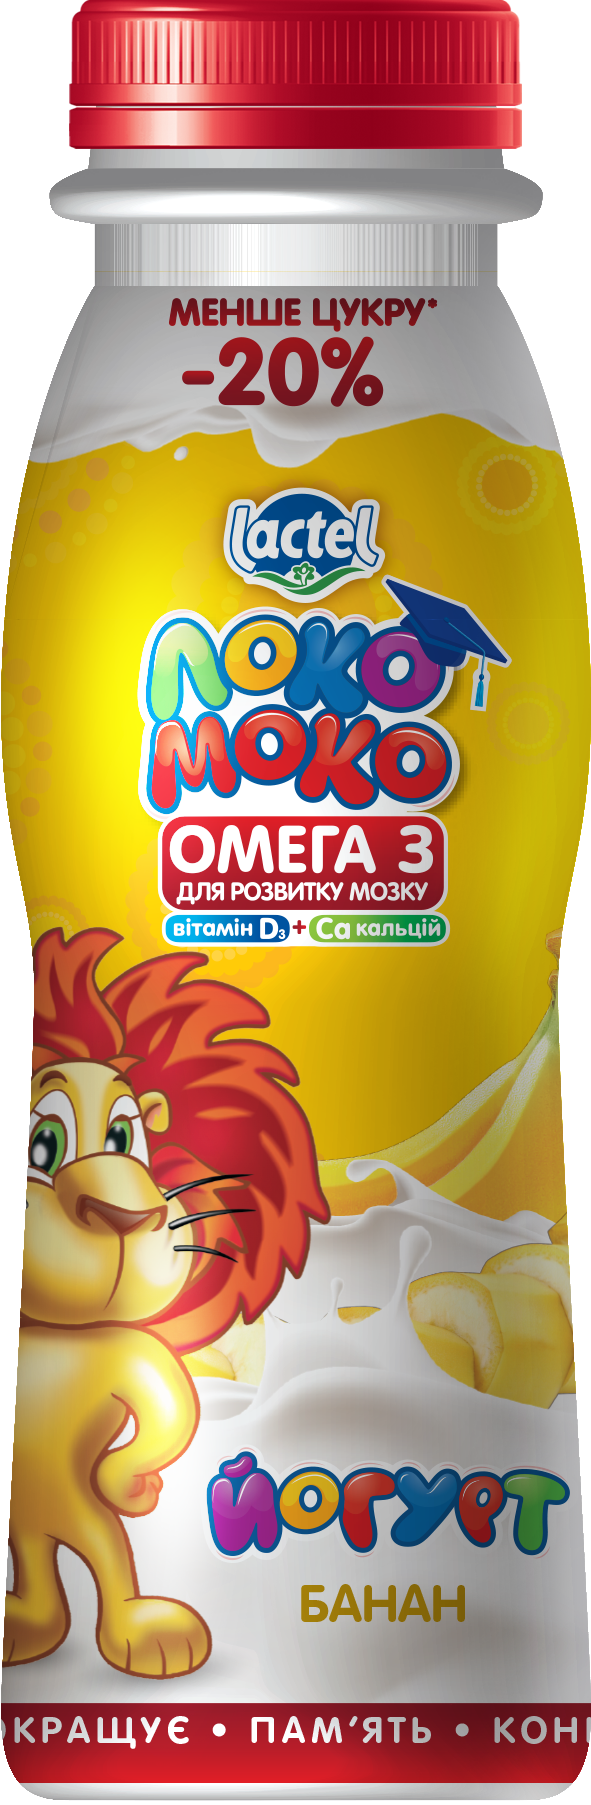 Drinkable yoghurt 1,5% Banana, with Calcium, Omega3 and Vitamin D3 Loko Moko (bottle 0,185 kg)